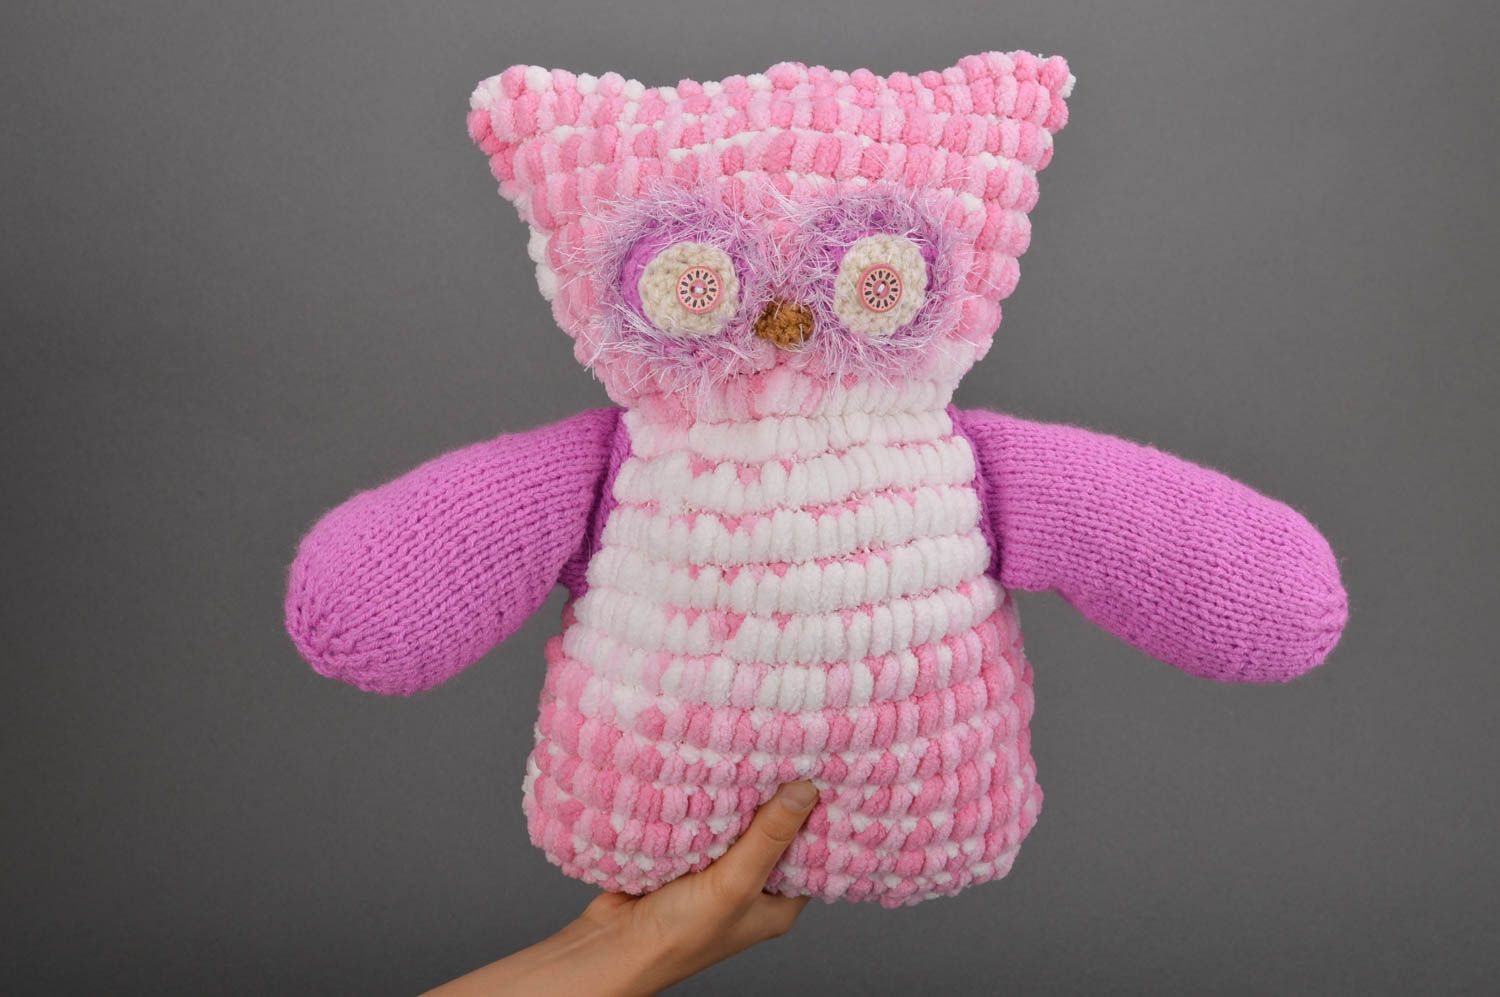 Handmade soft owl toy decorative stuffed toy gift for baby nursery decor ideas photo 5